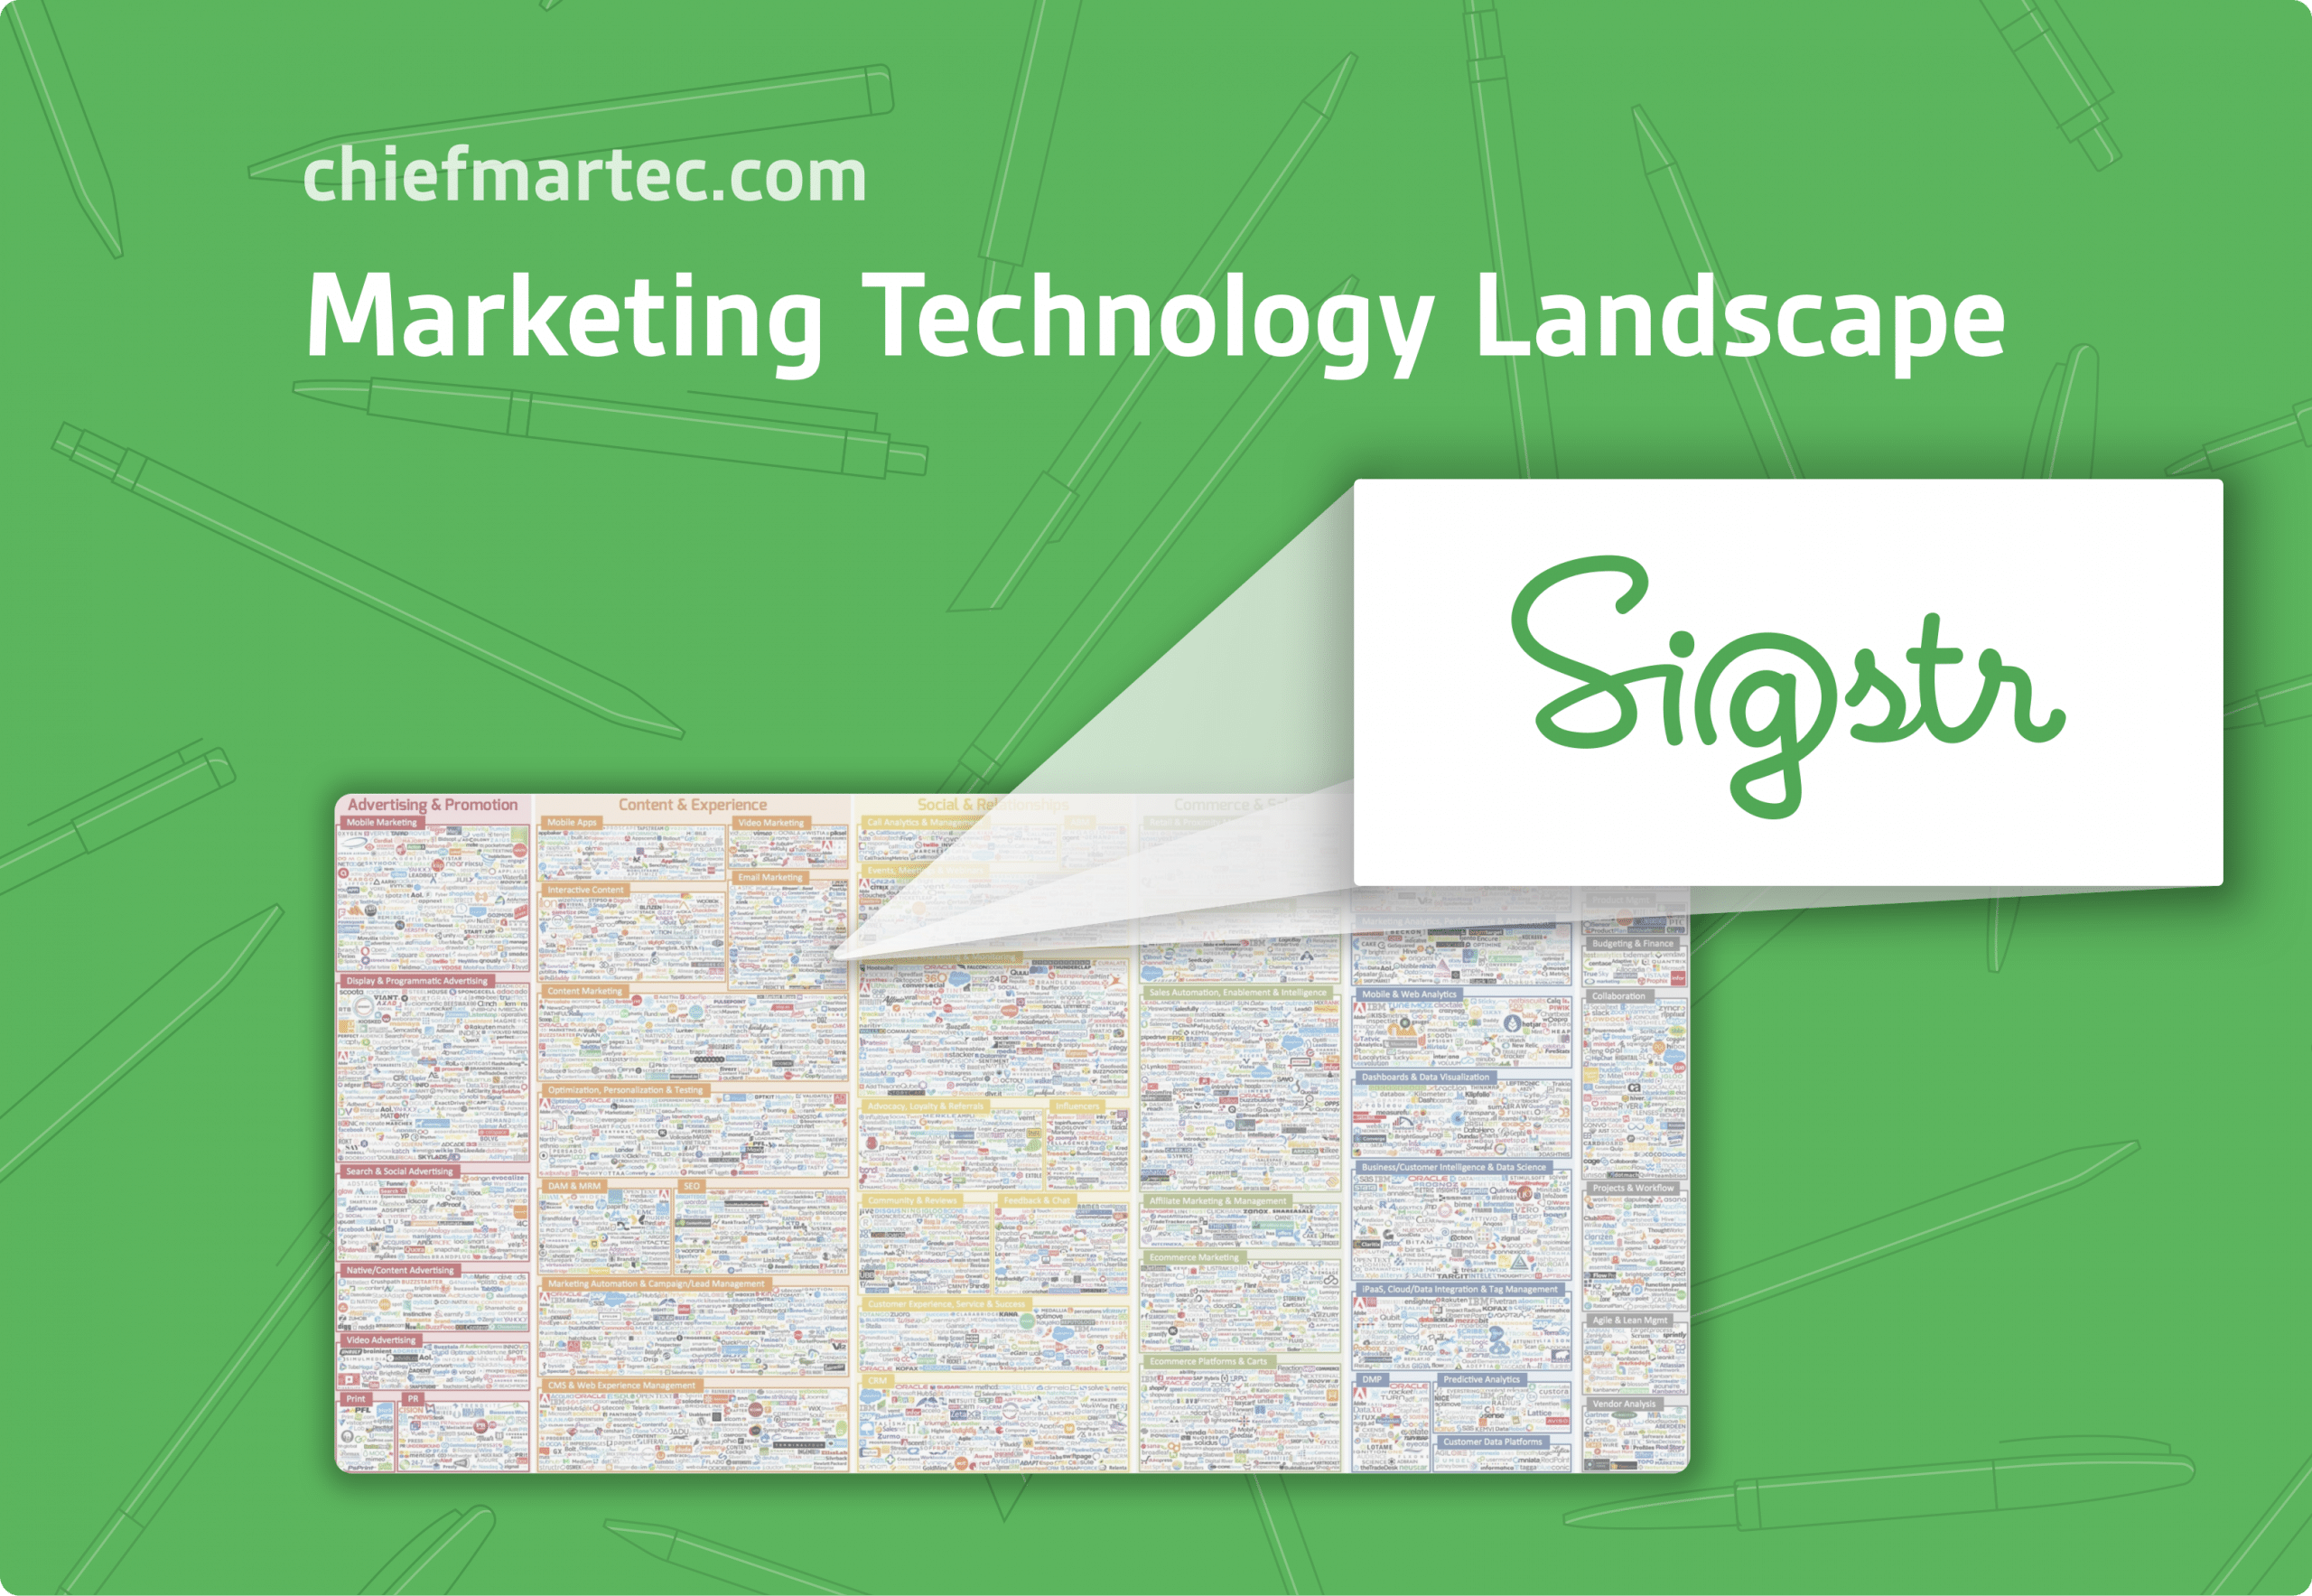 marketingtechlandscape-option3